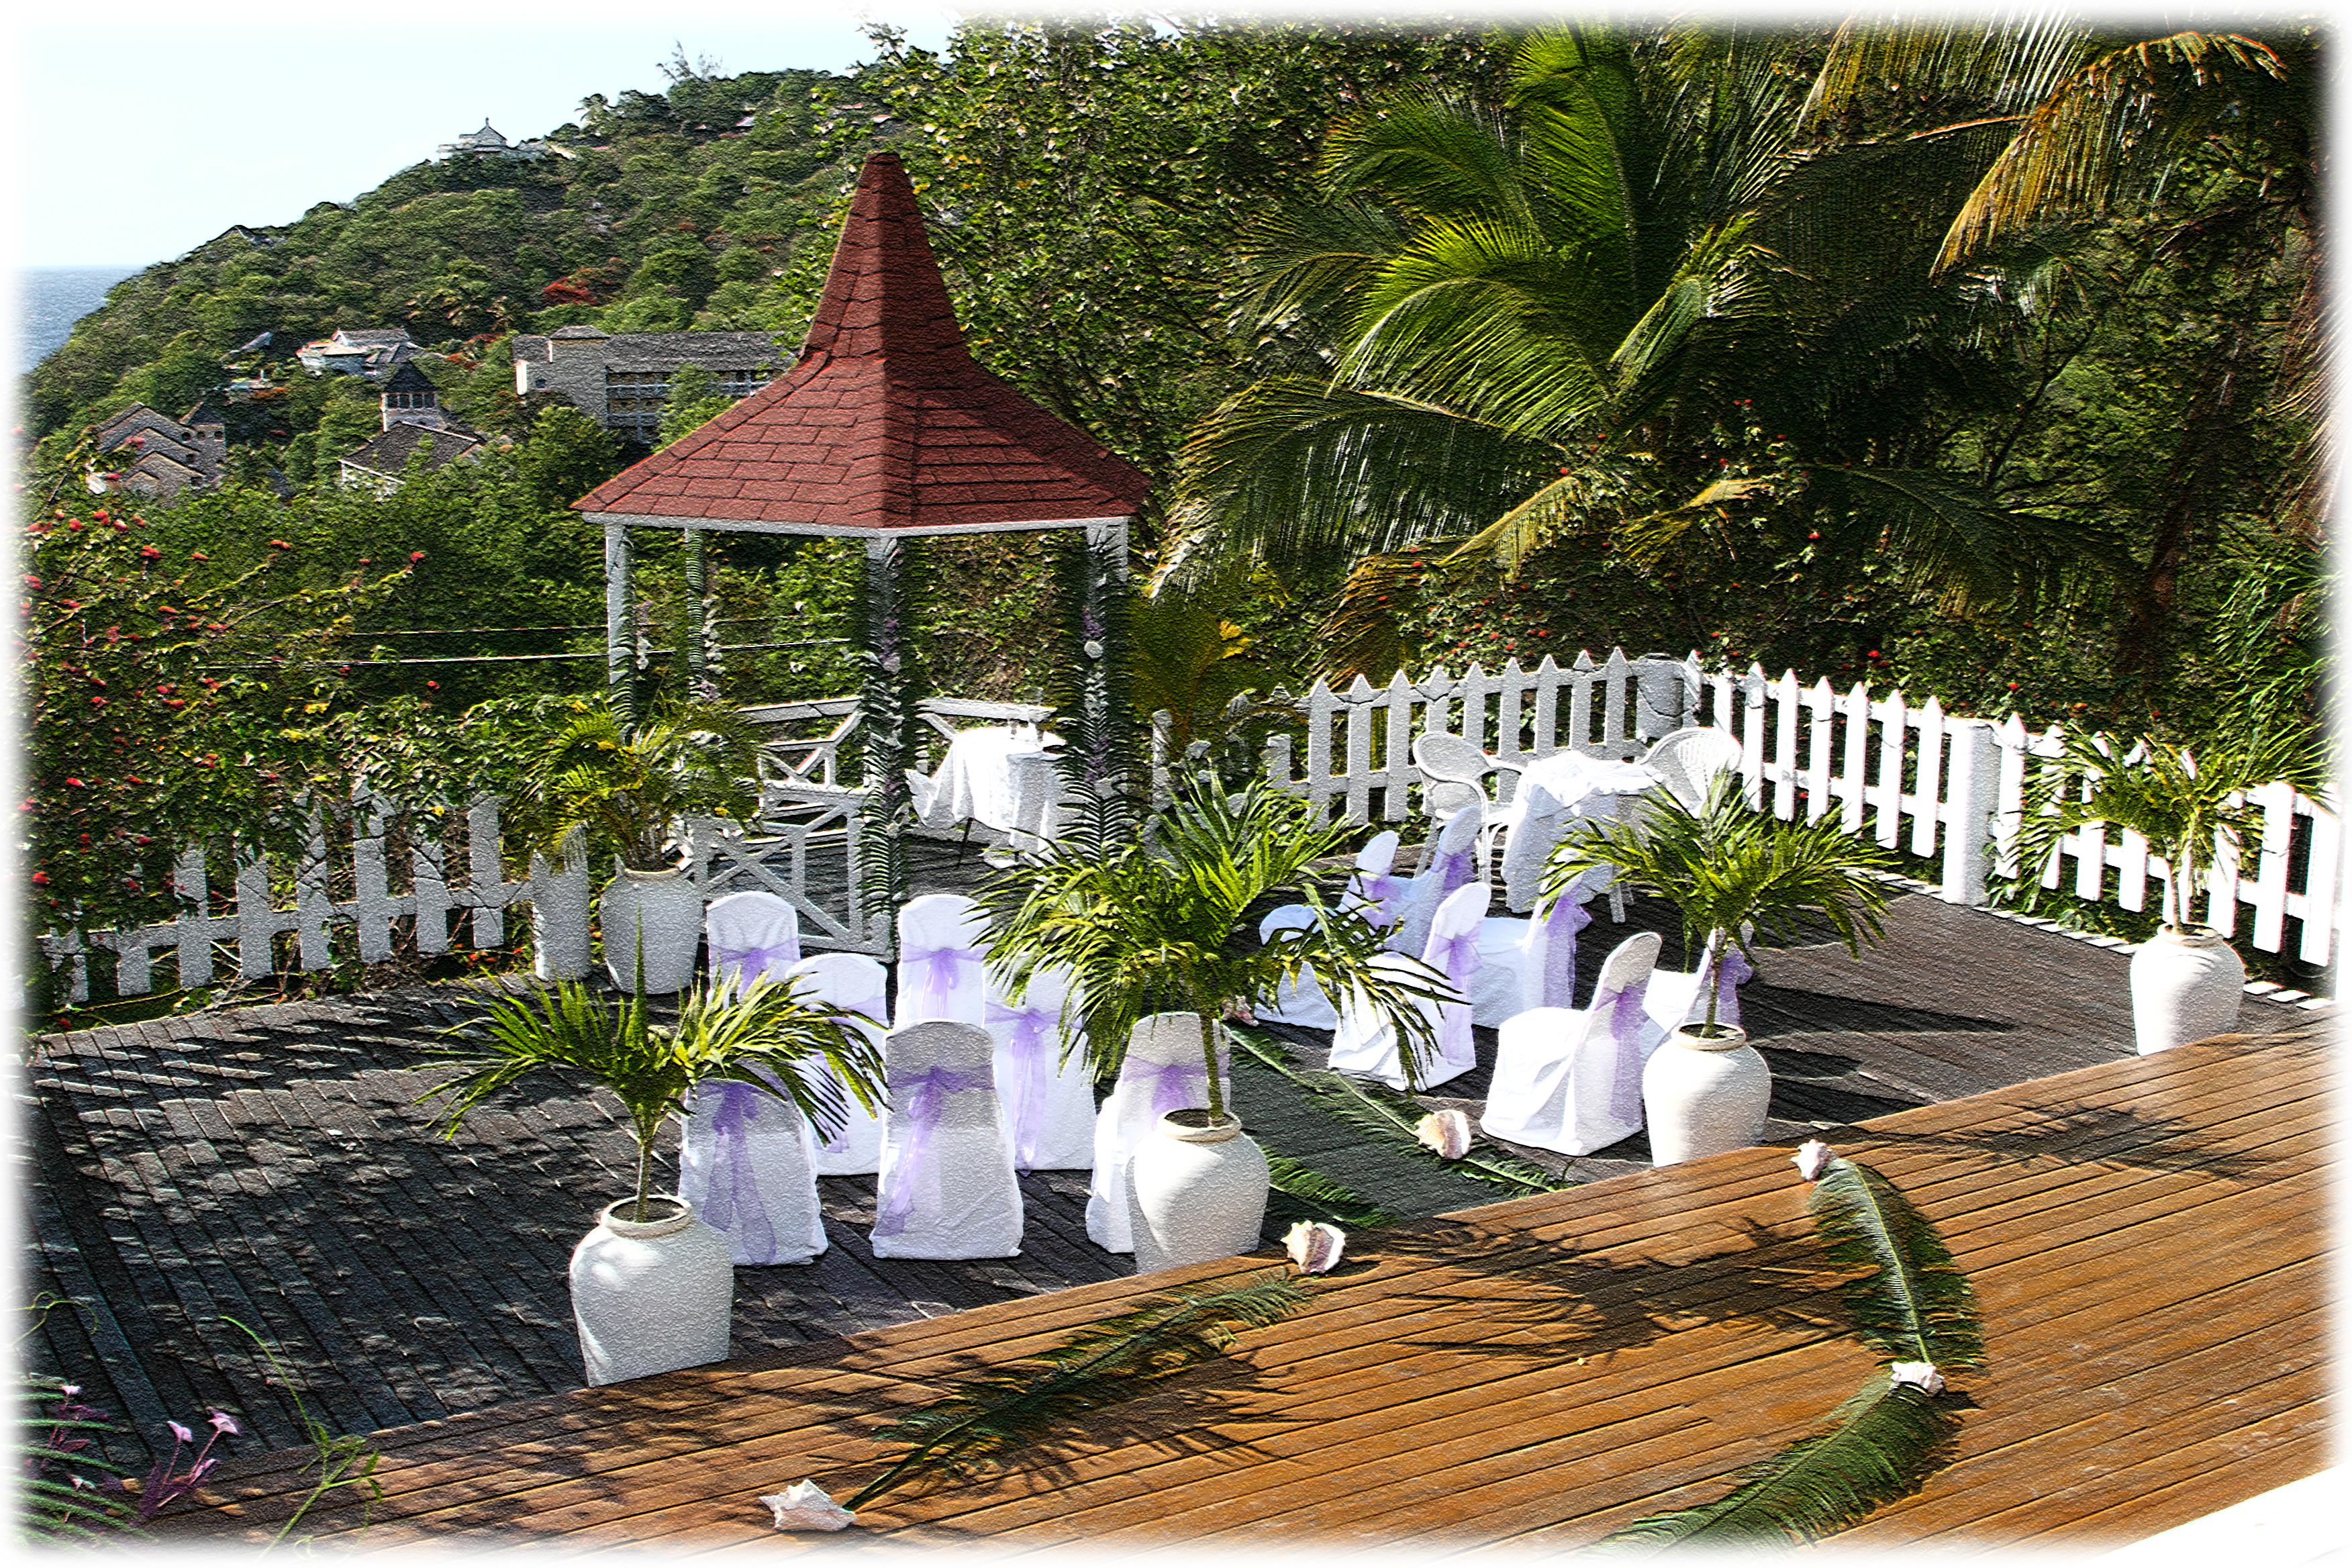 Full Service Villa For Families, Retreats, Groups, Weddings; 4 Min Walk To Beach - Saint Lucia